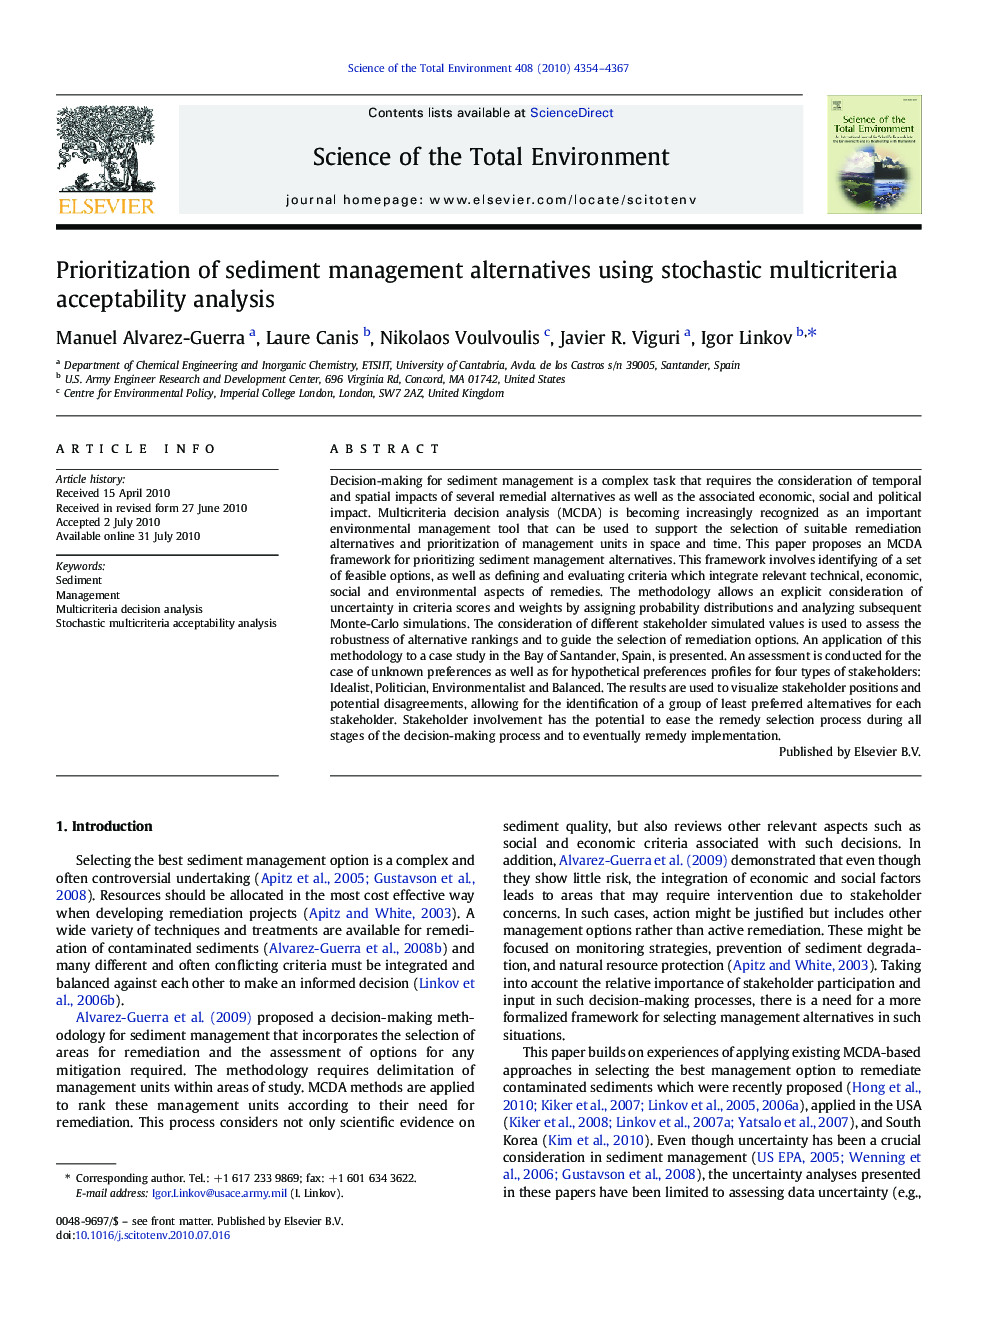 Prioritization of sediment management alternatives using stochastic multicriteria acceptability analysis